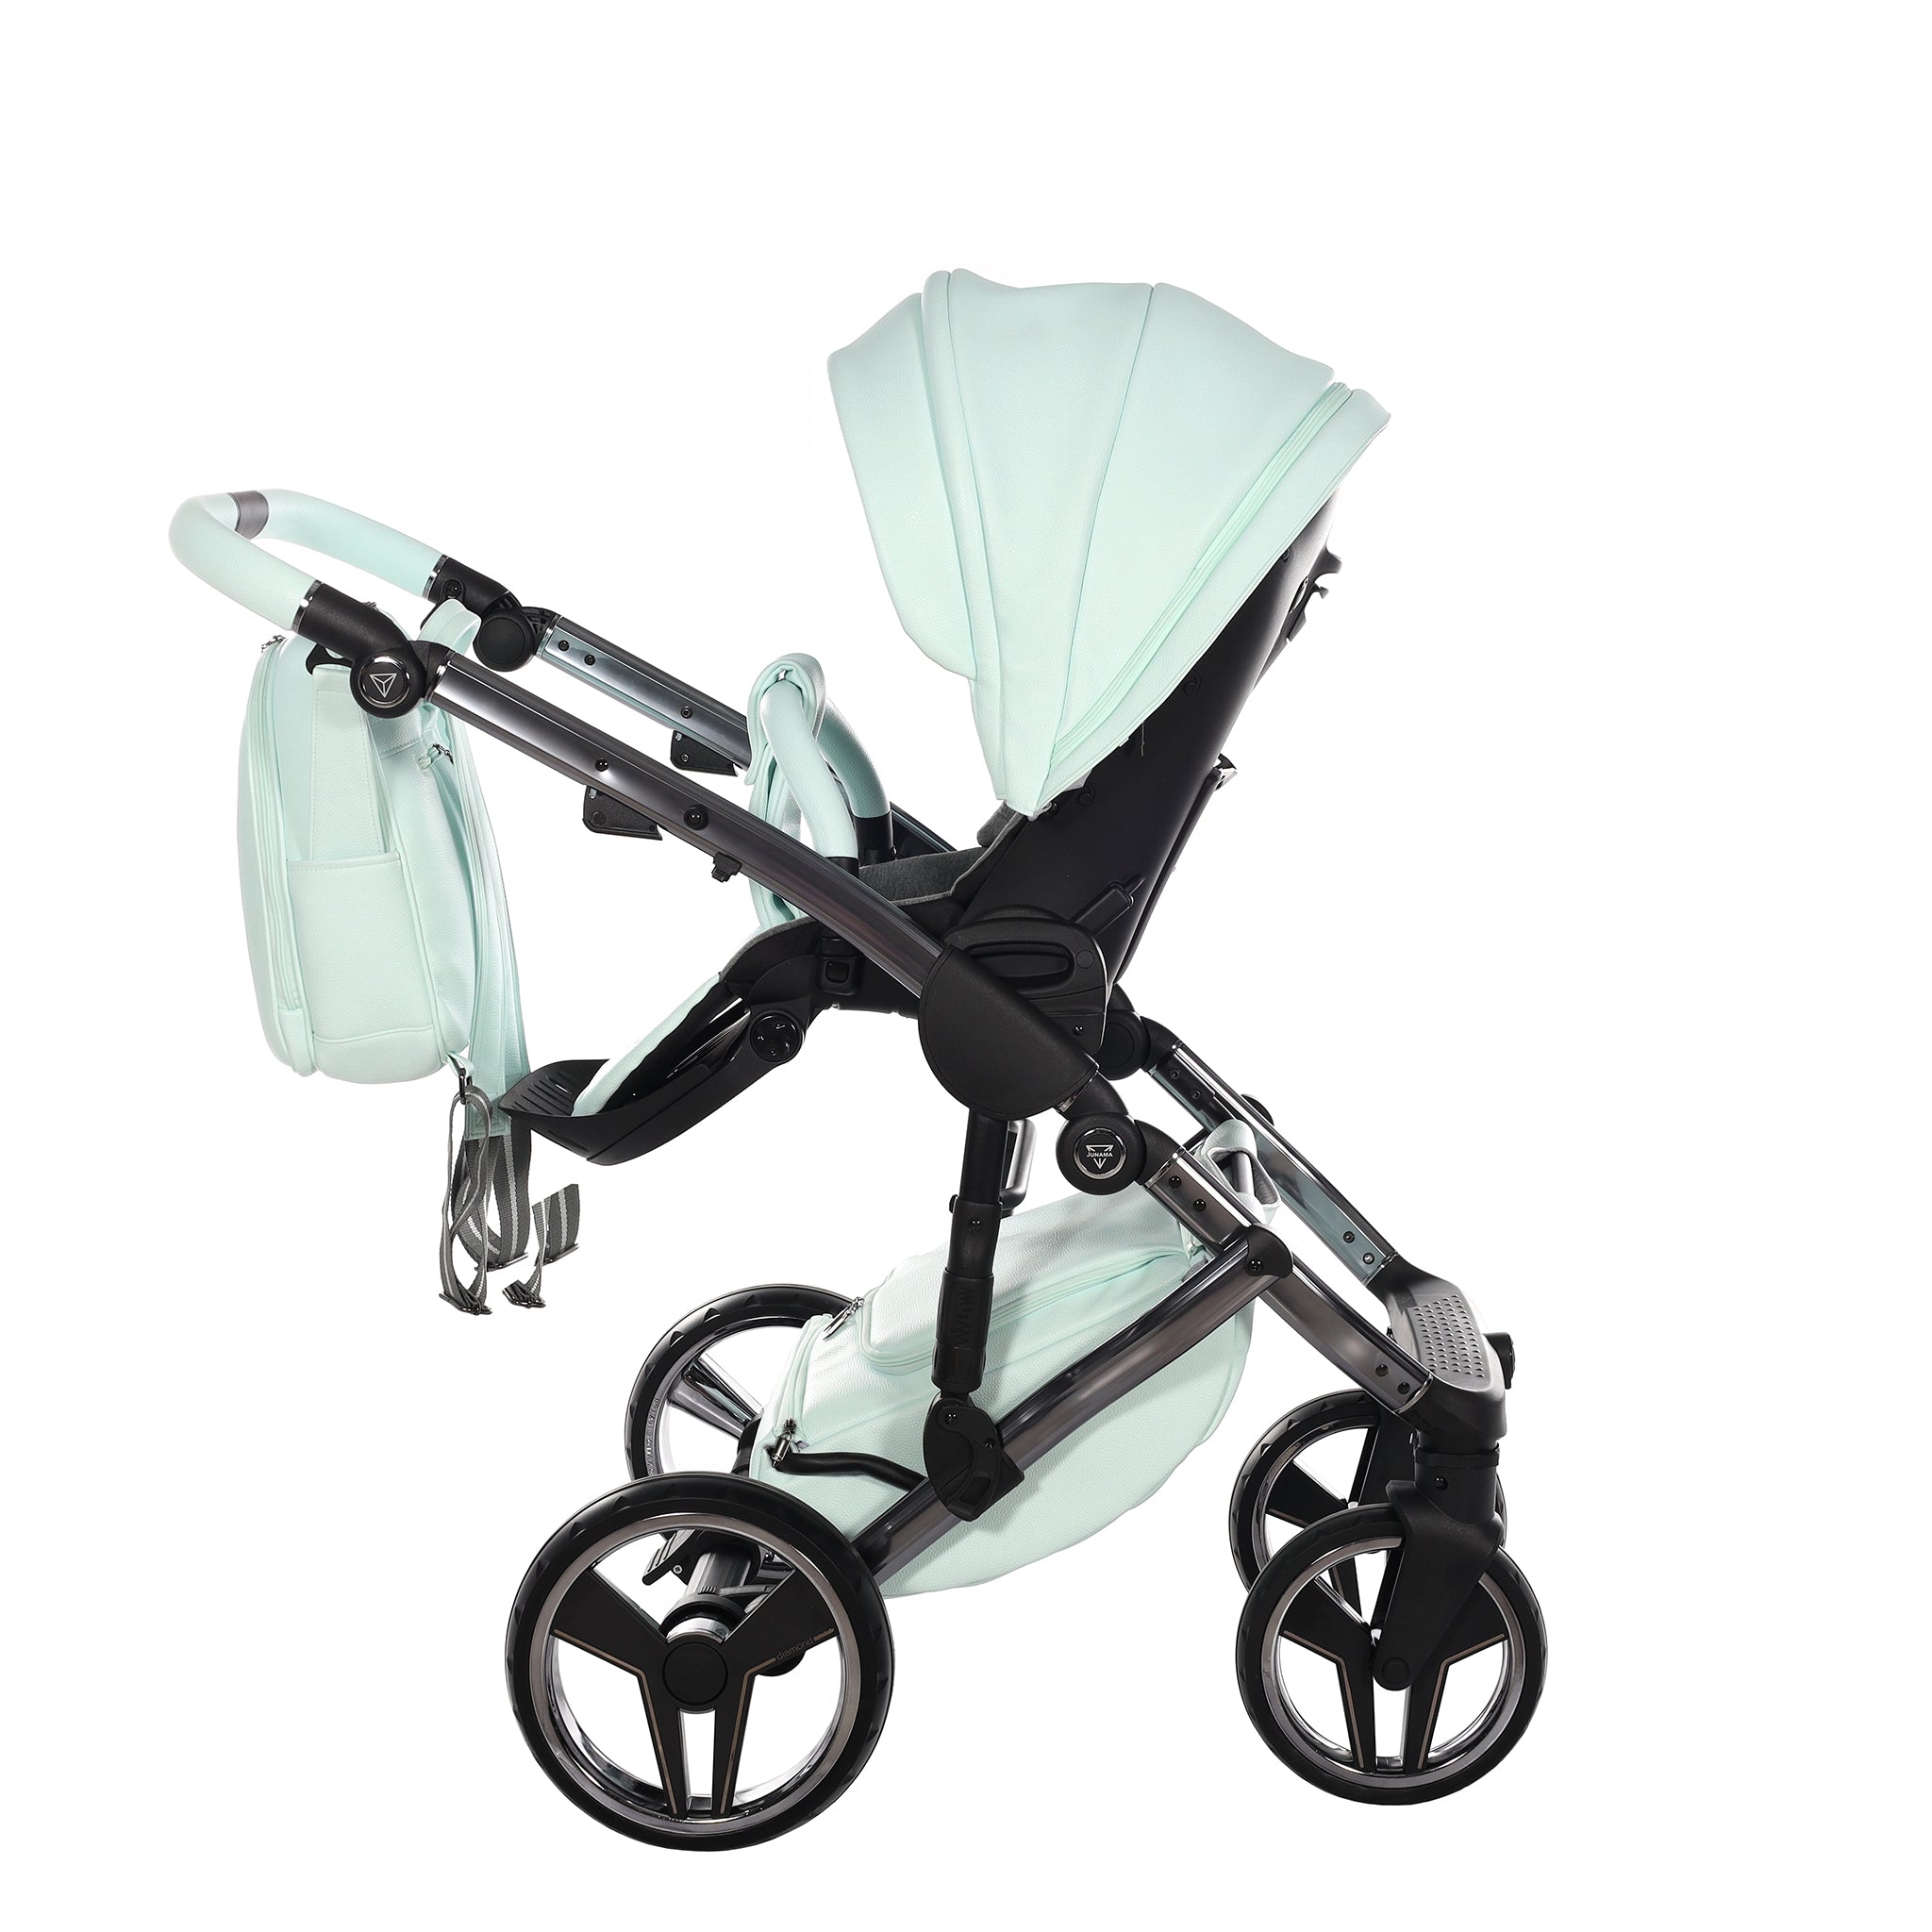 Junama Handcraft, baby prams or stroller 2 in 1 - Black Chrome and Light Blue, Code number: JUNHC01